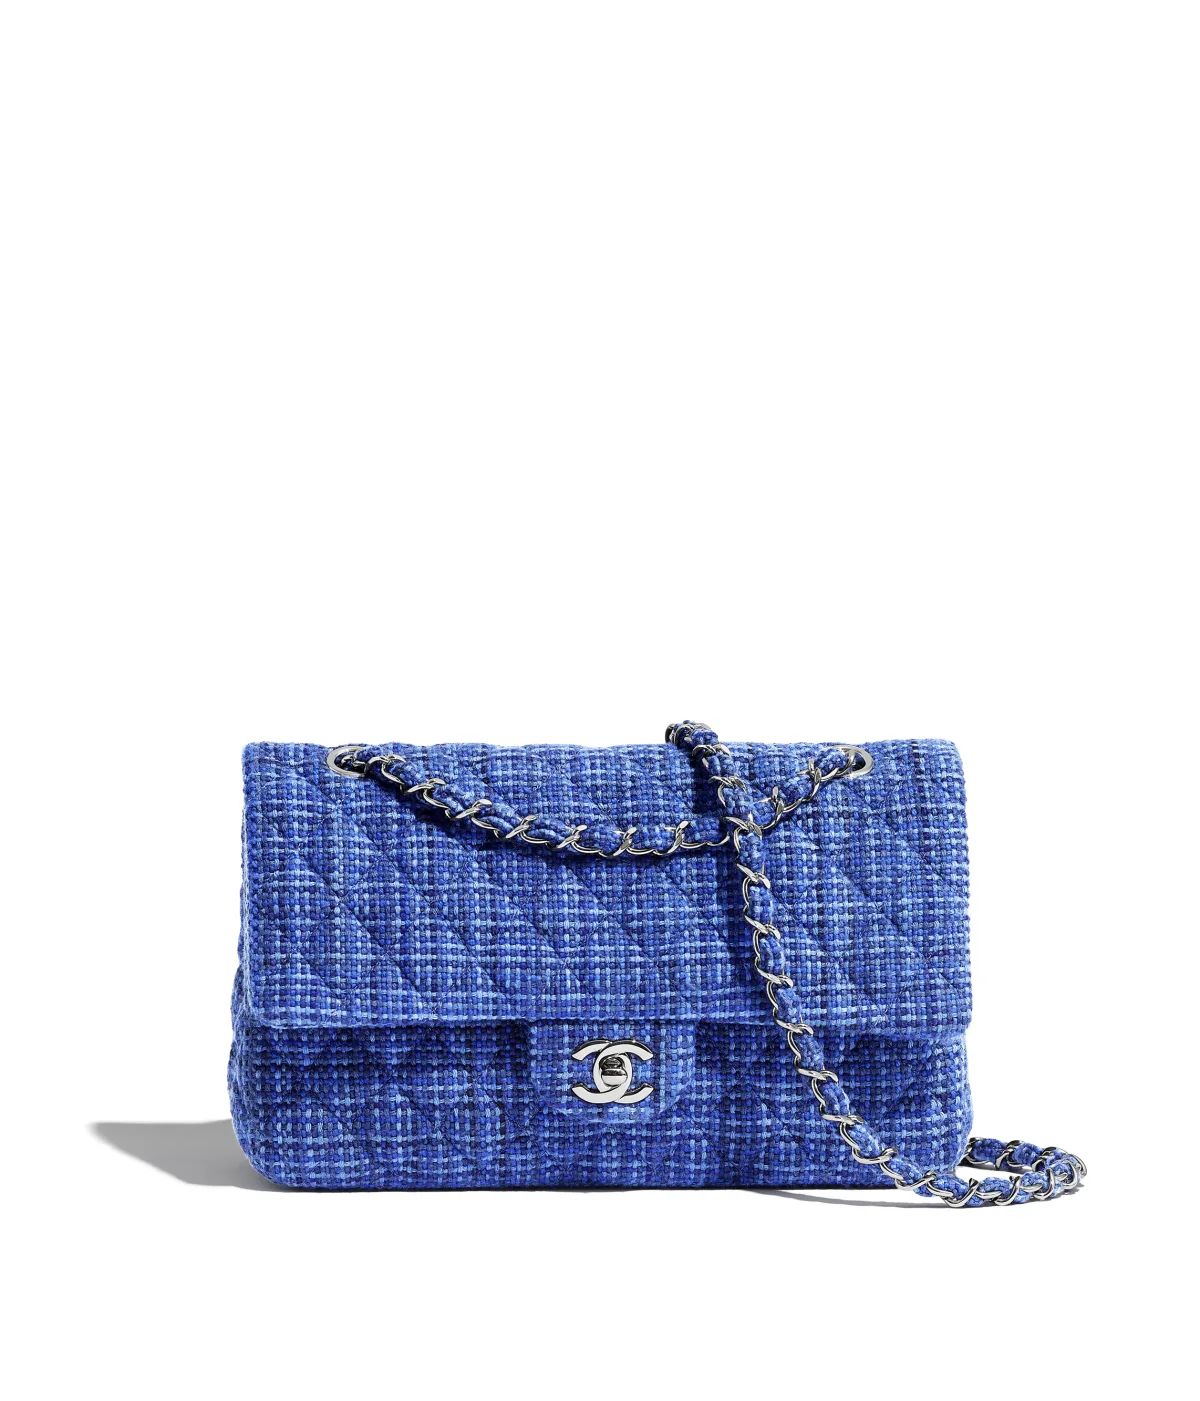 Klassische Tasche, tweed & silberfarbenes metall, blau - CHANEL | Chanel, Inc. (US)